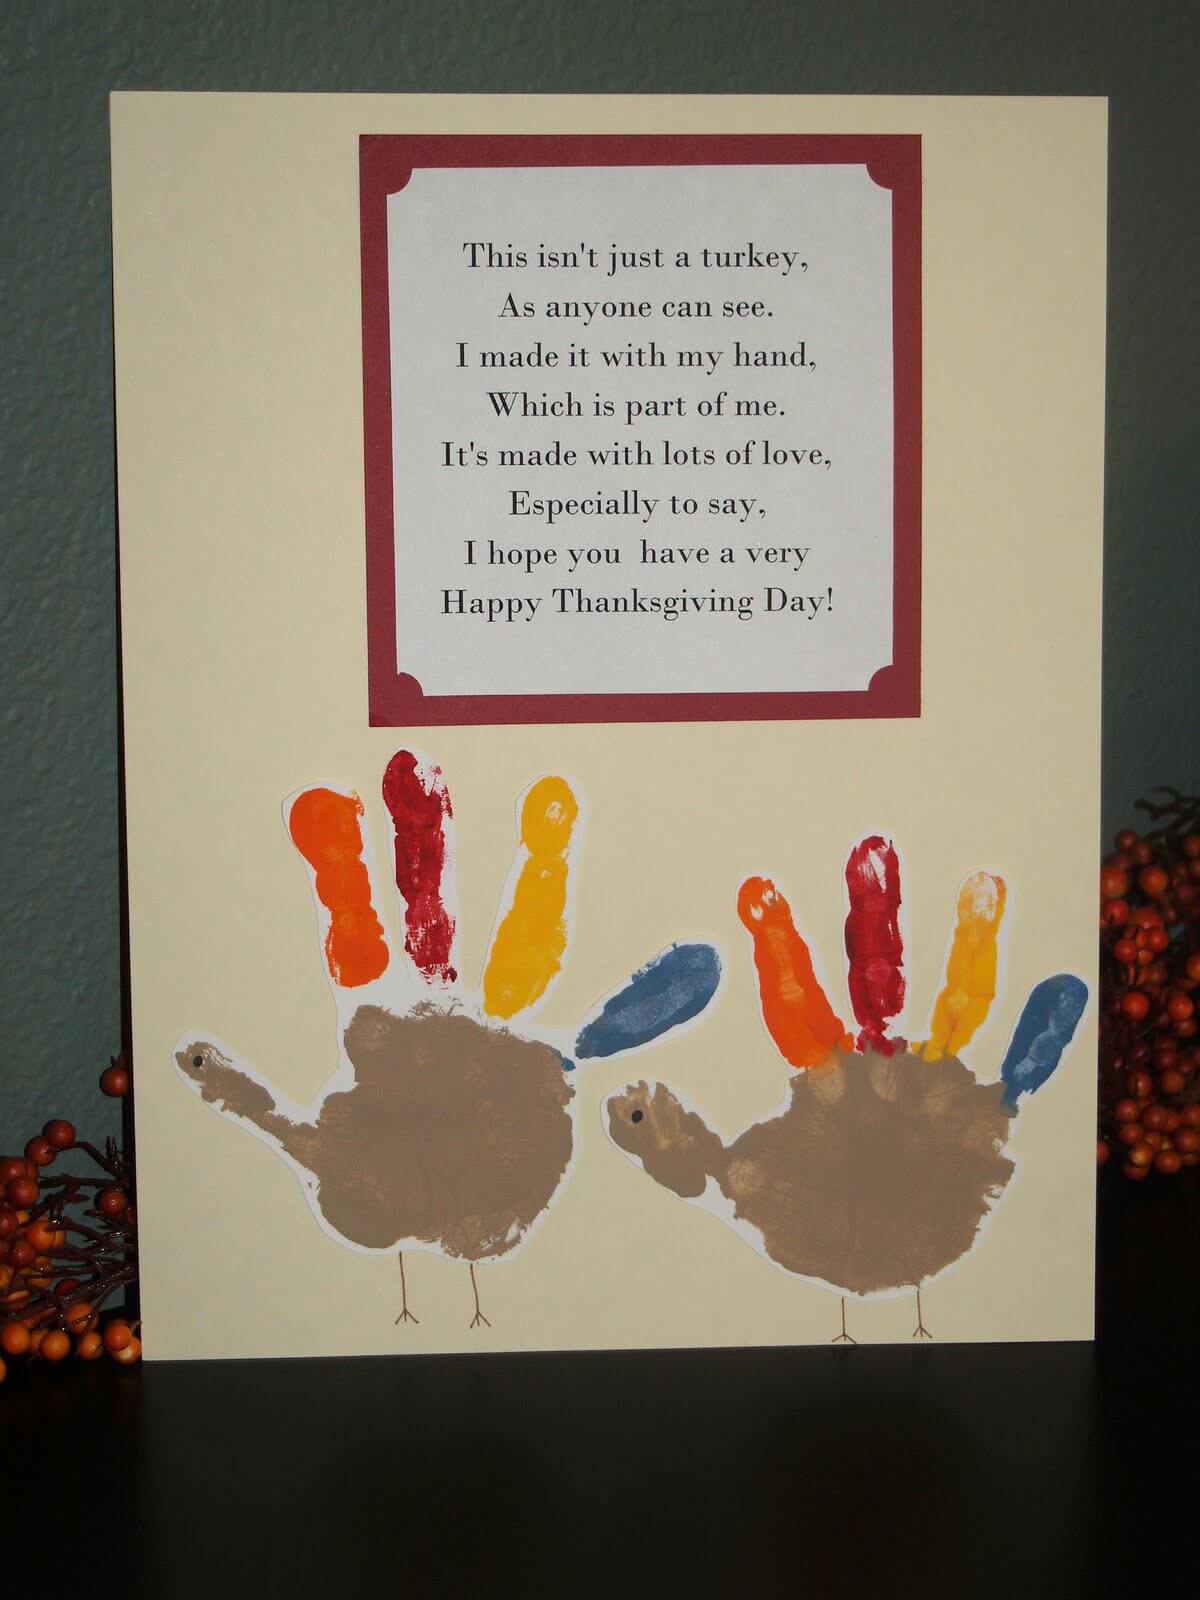 15 Heartwarming Thanksgiving Poems - Holiday Vault